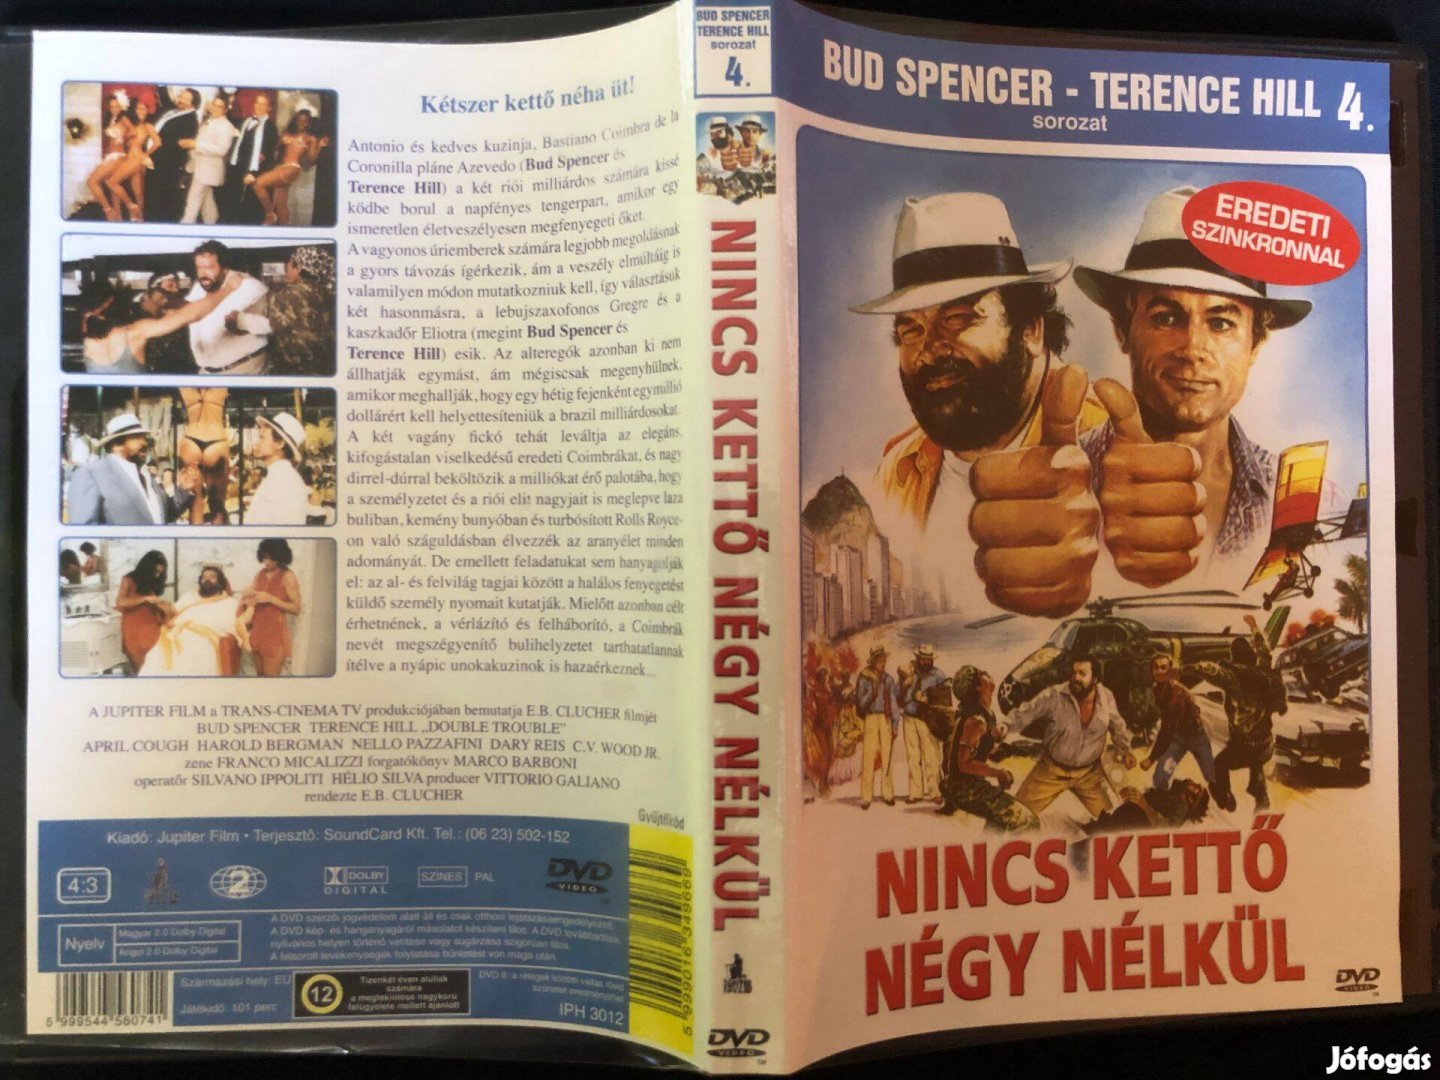 Nincs kettő négy nélkül (Bud Spencer, Terence Hill) DVD